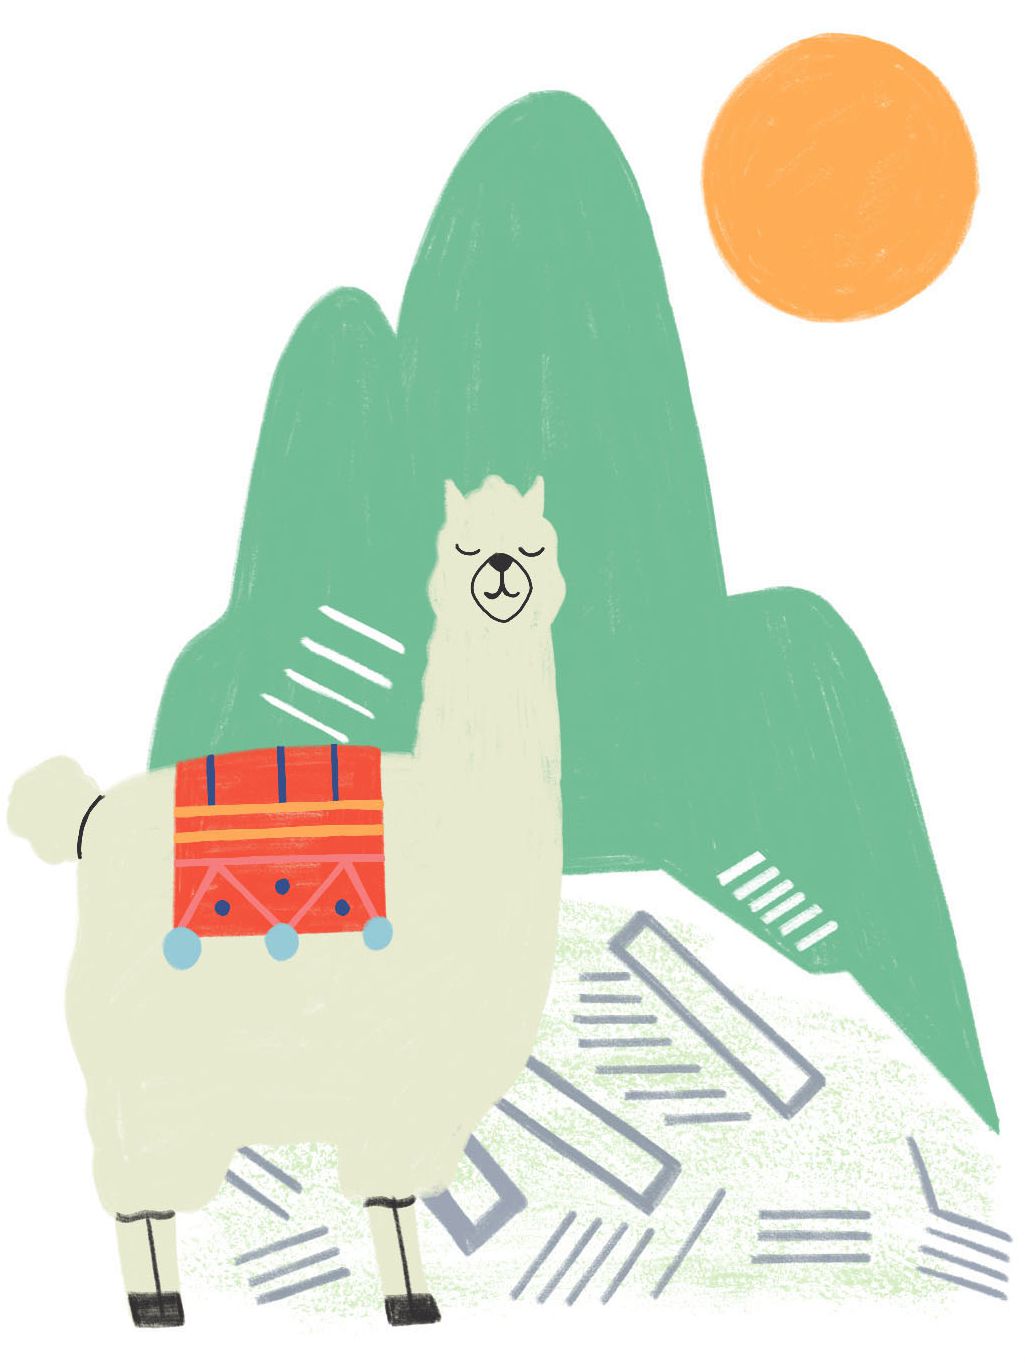 alpaca and mountain landscape illustration